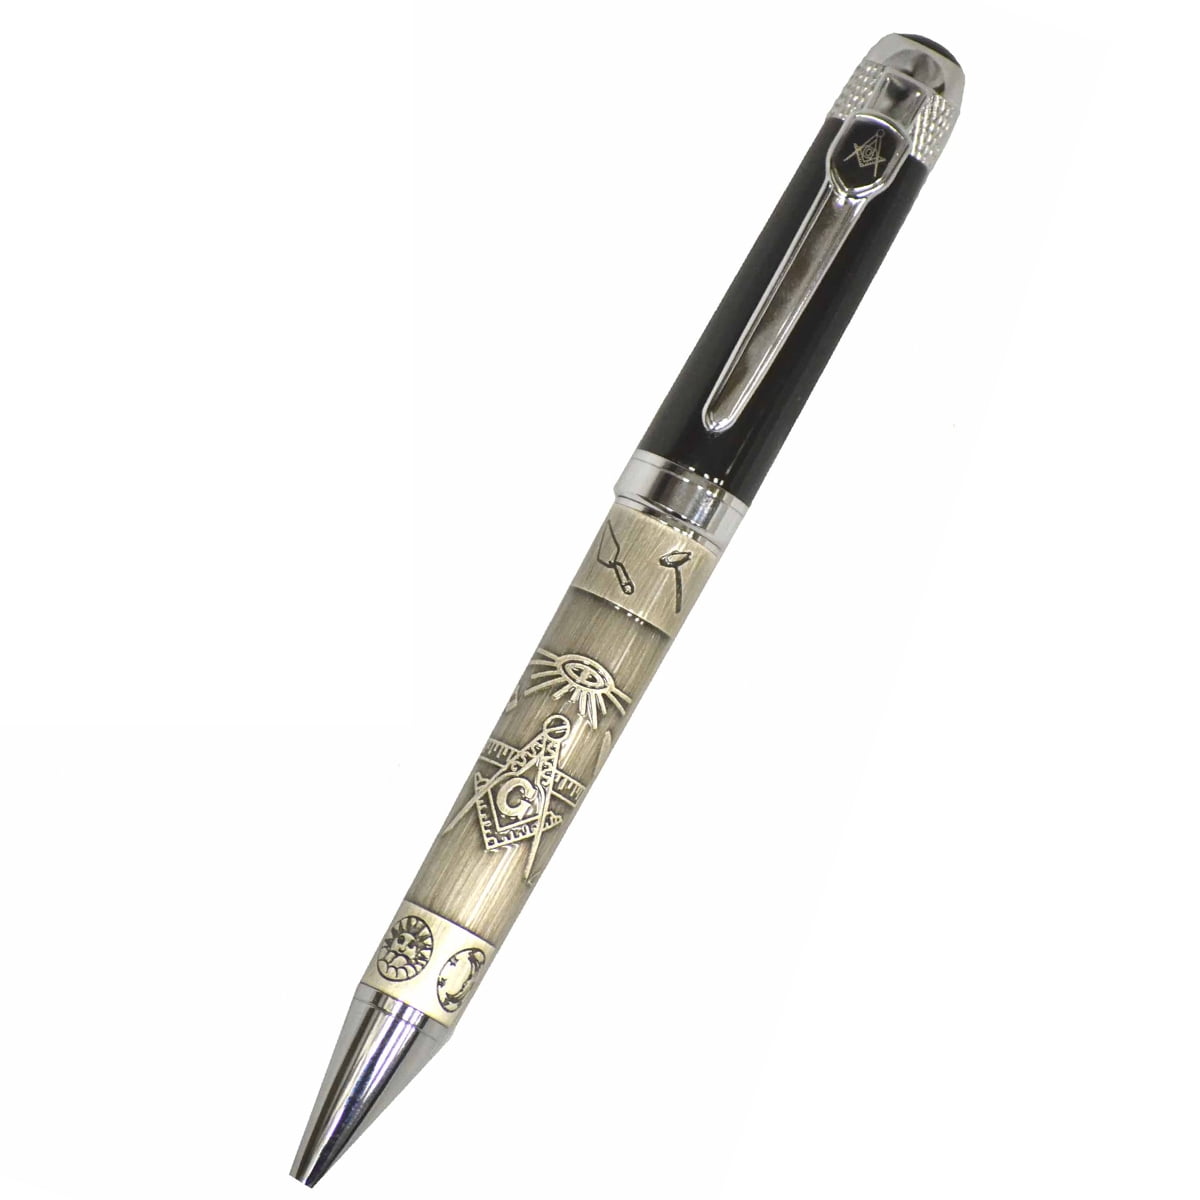 2 NEW Boxed Free Mason TwoTone Black & Pewter Ballpoint Pen with Masonic Symbols 